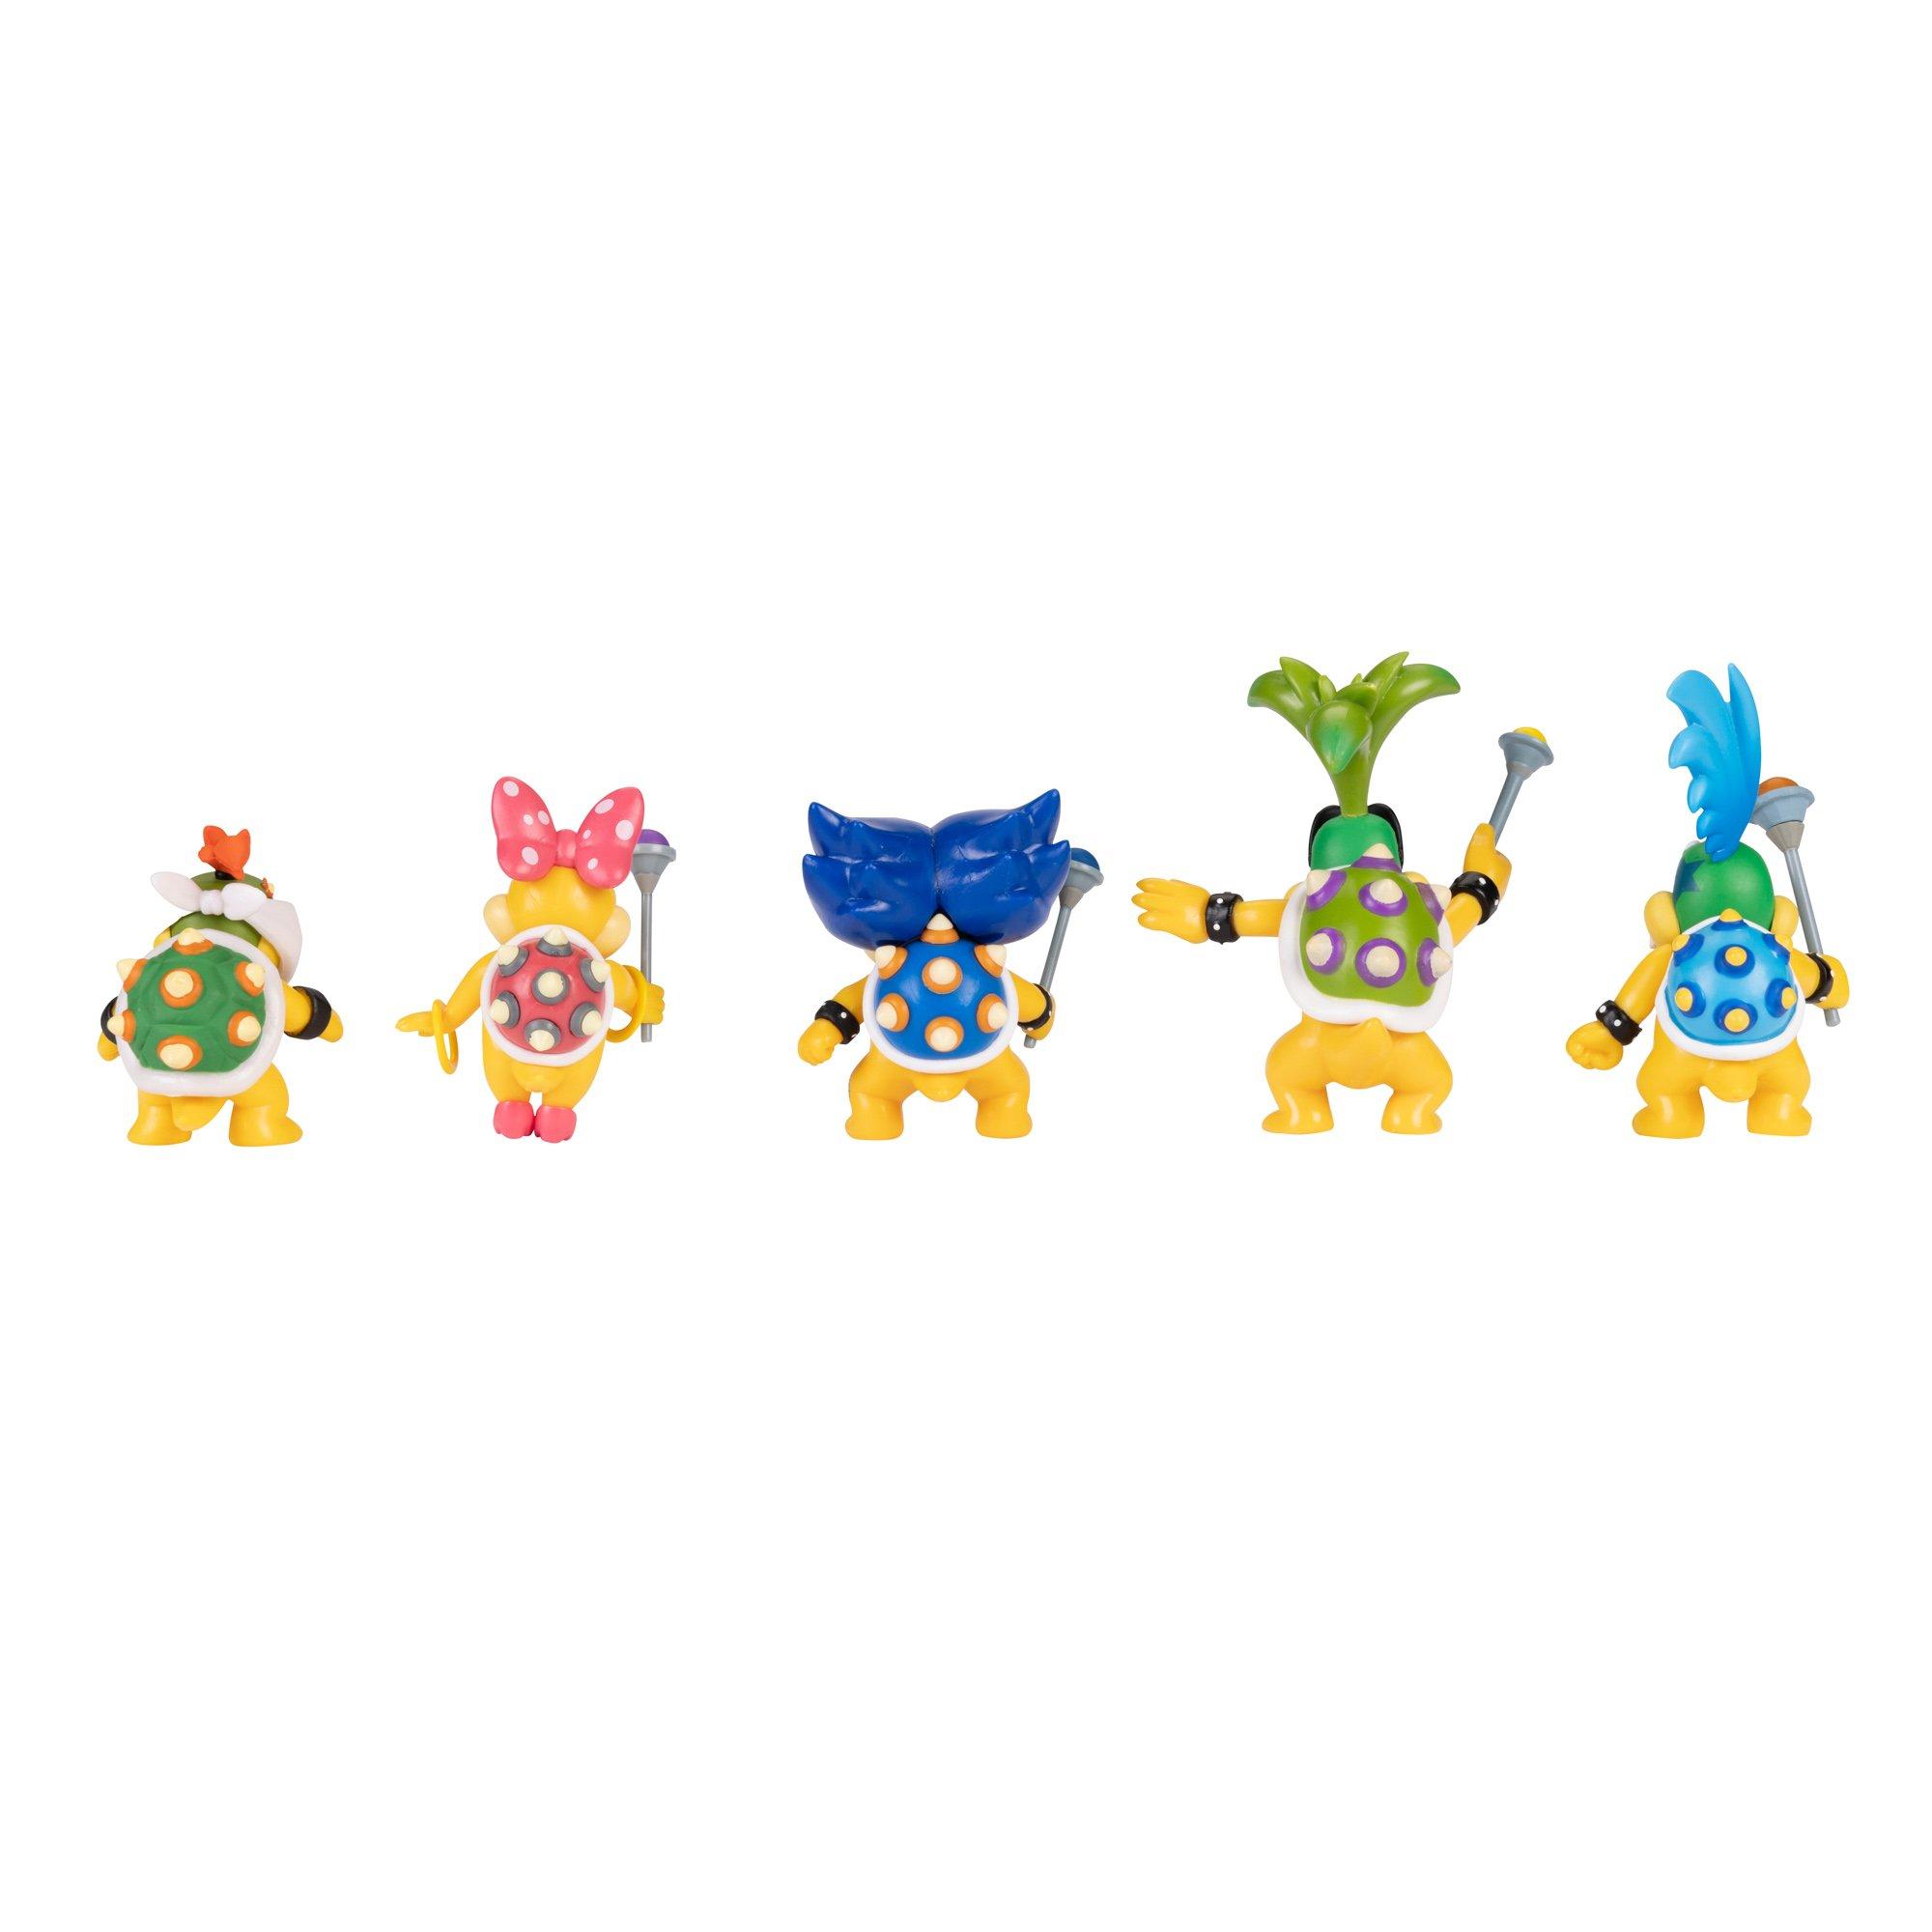 Nintendo Super Mario Bowser Jr, Wendy, Ludwig, Iggy & Larry 2.5-inch Mini Figure 5-Pack [Koopalings]